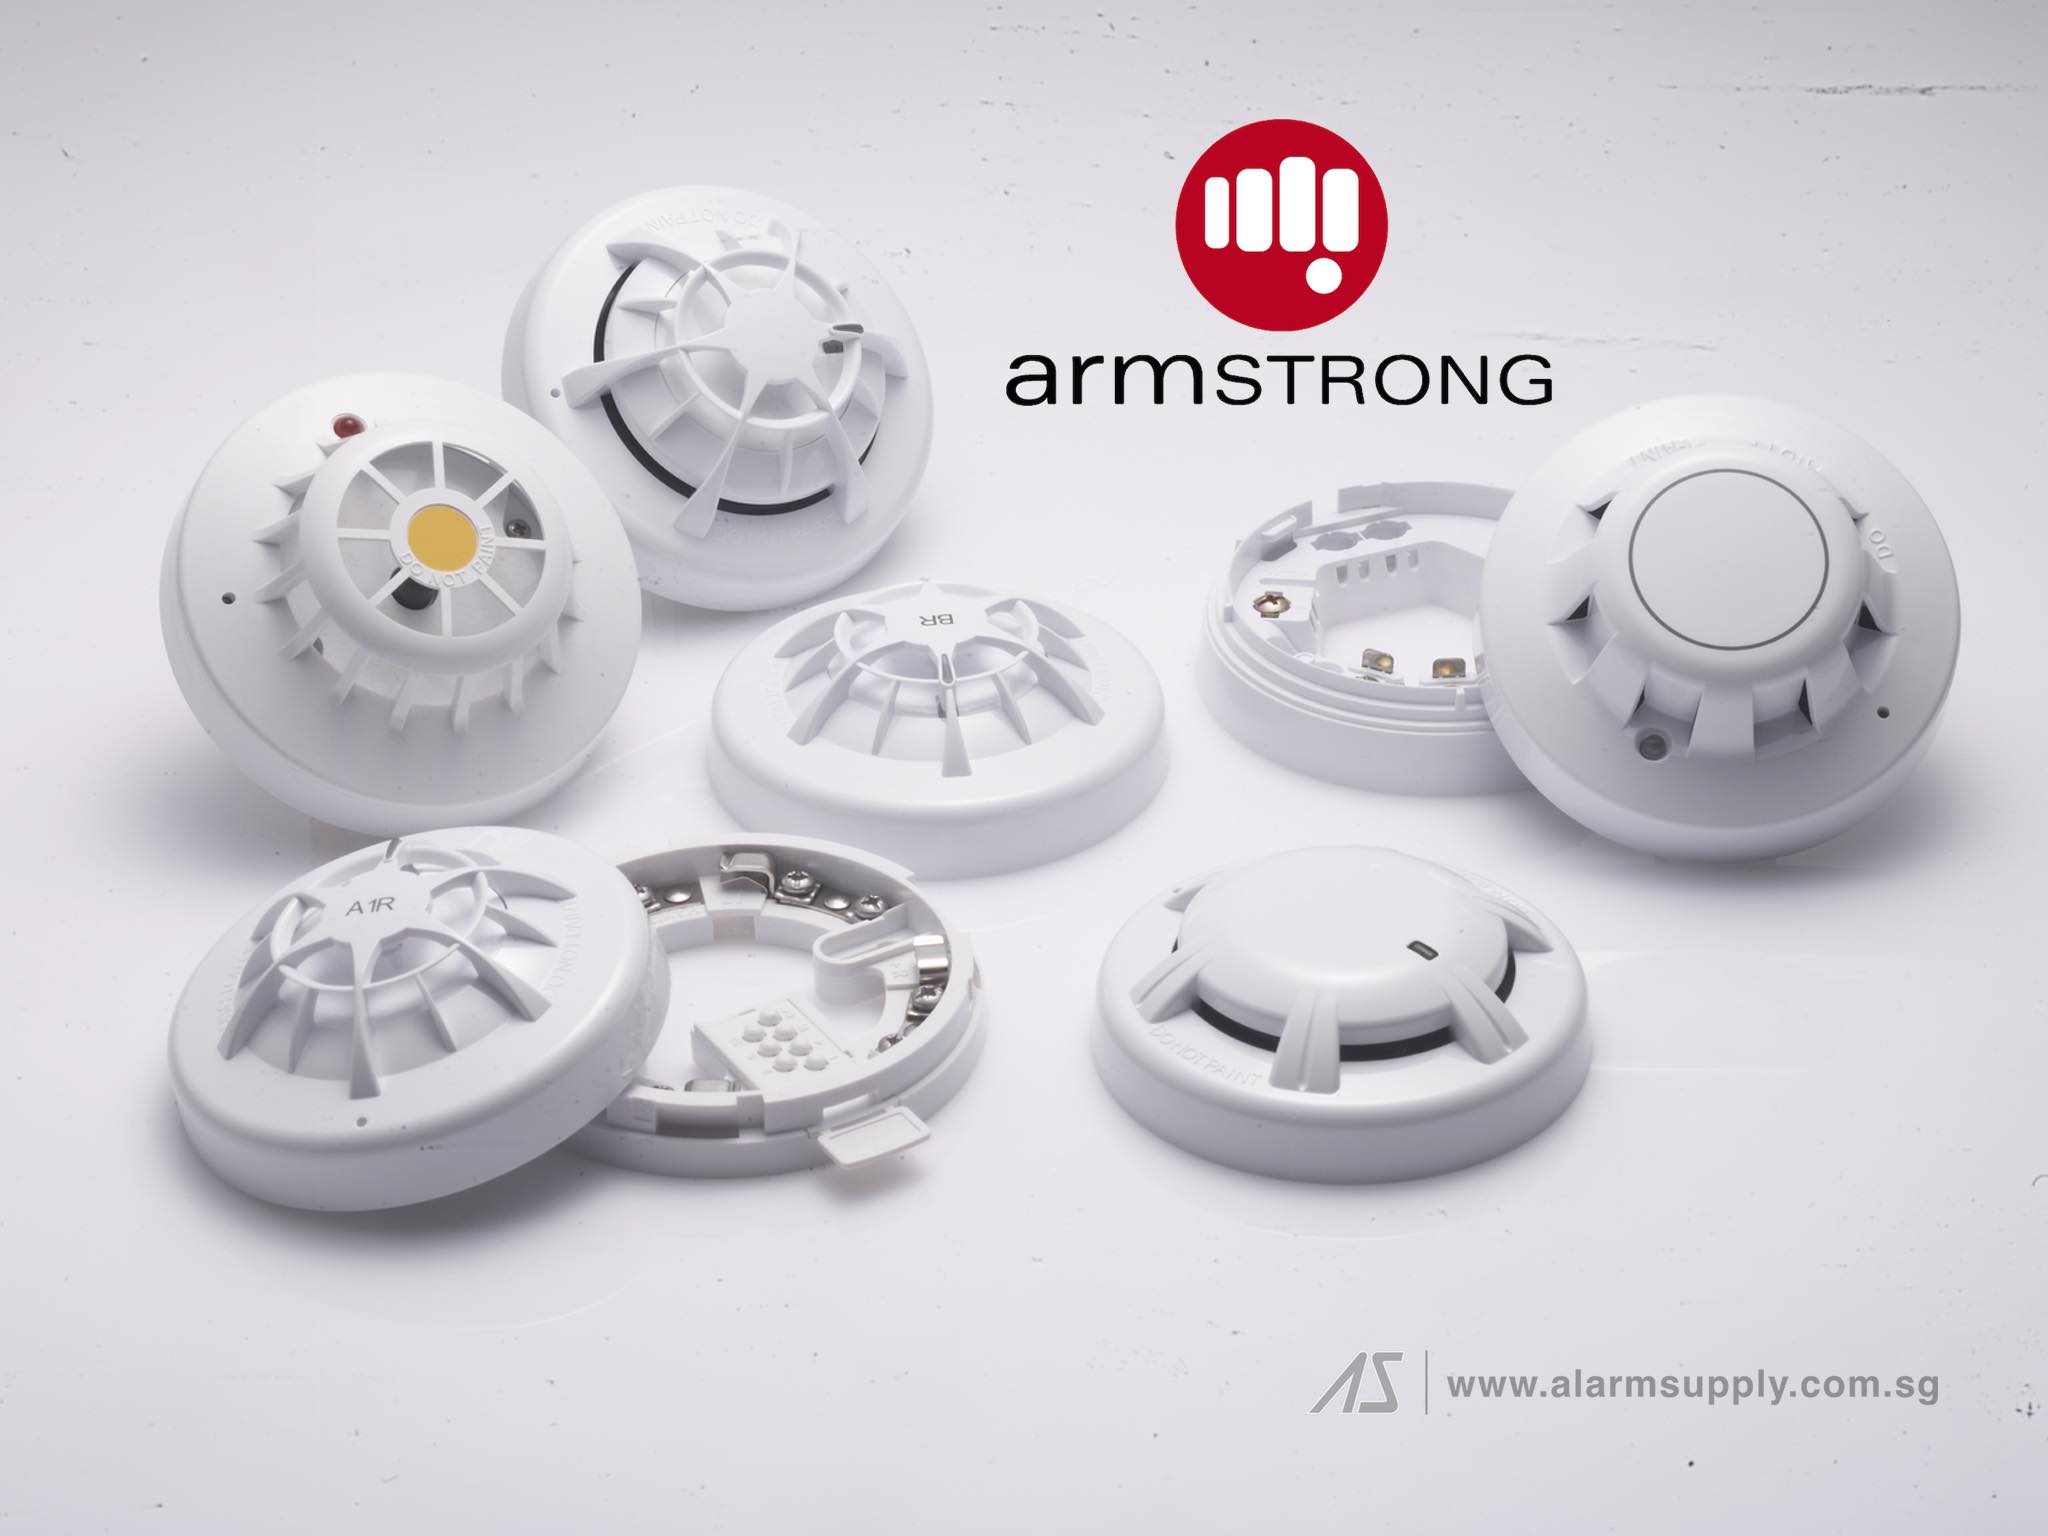 Armstrong detectors